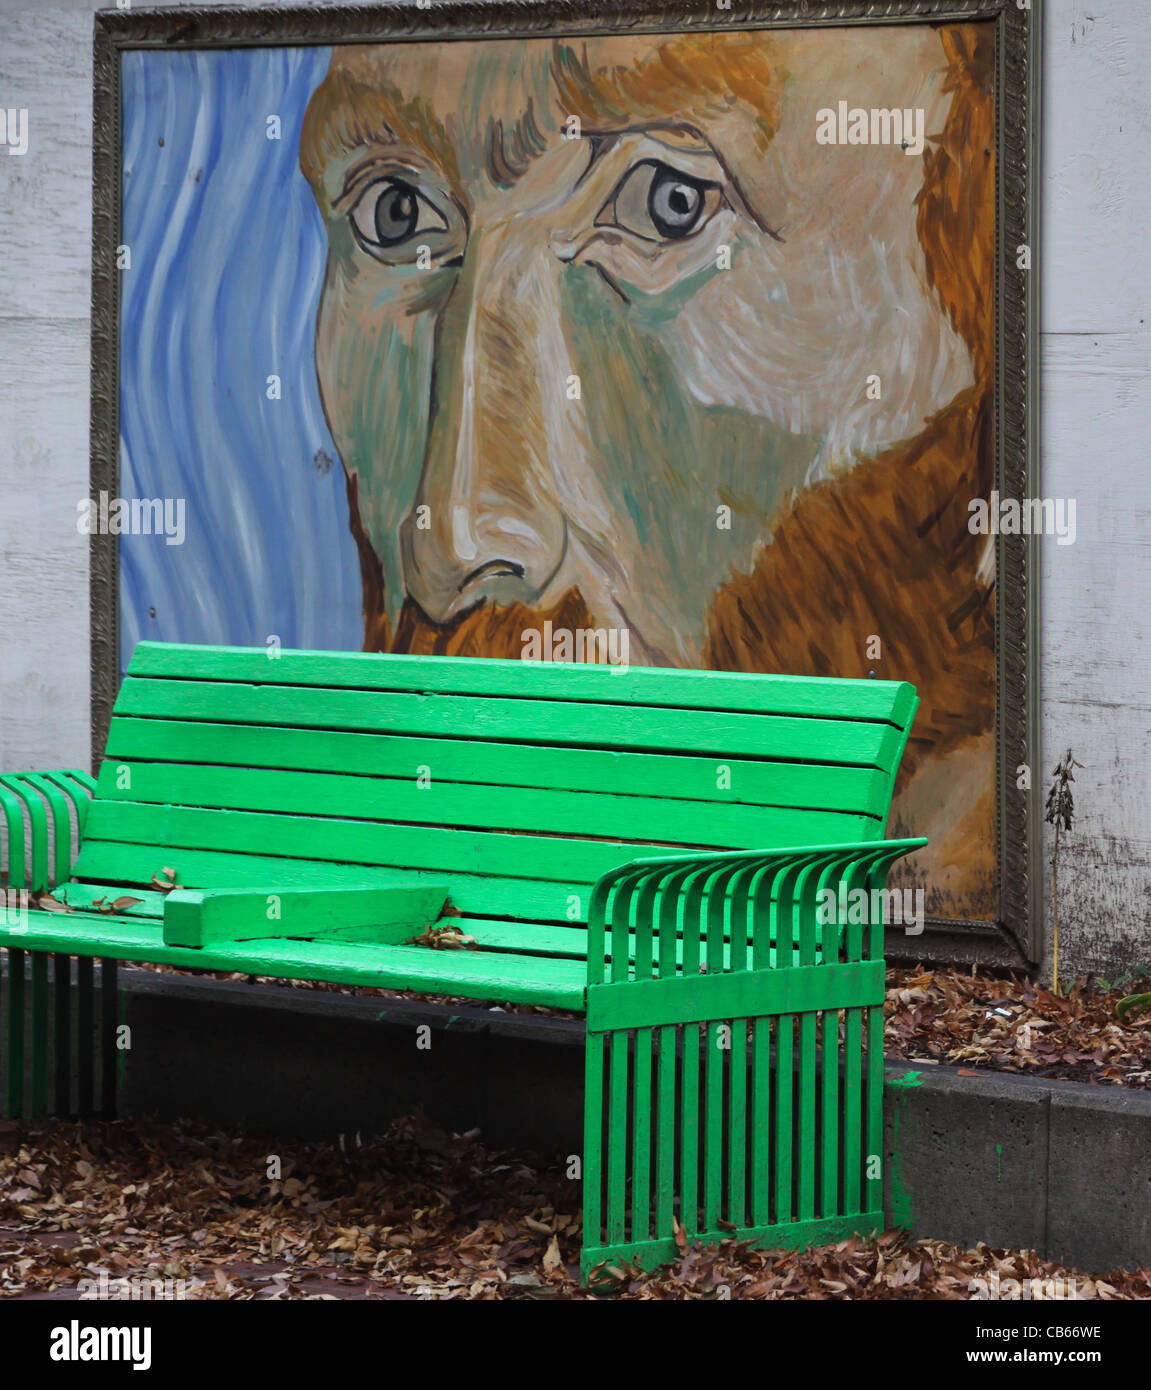 Vincent Van Gogh over looking park bench. Stock Photo